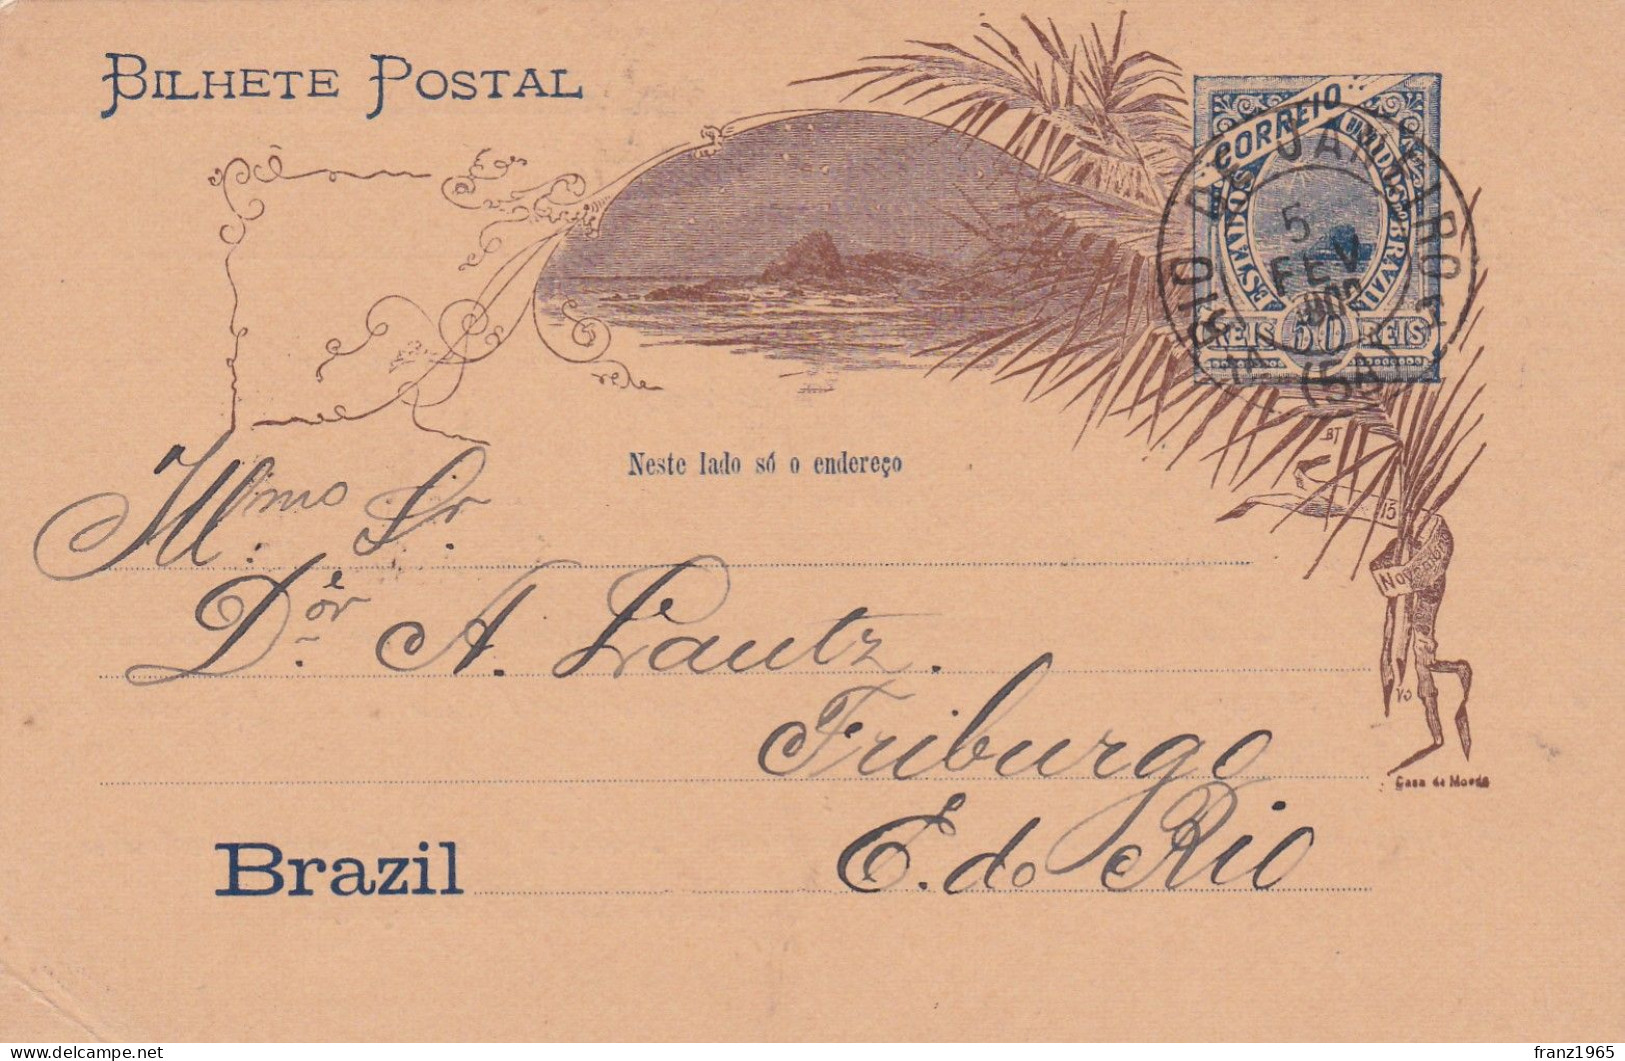 Bilhete Postal - 1905 - Storia Postale